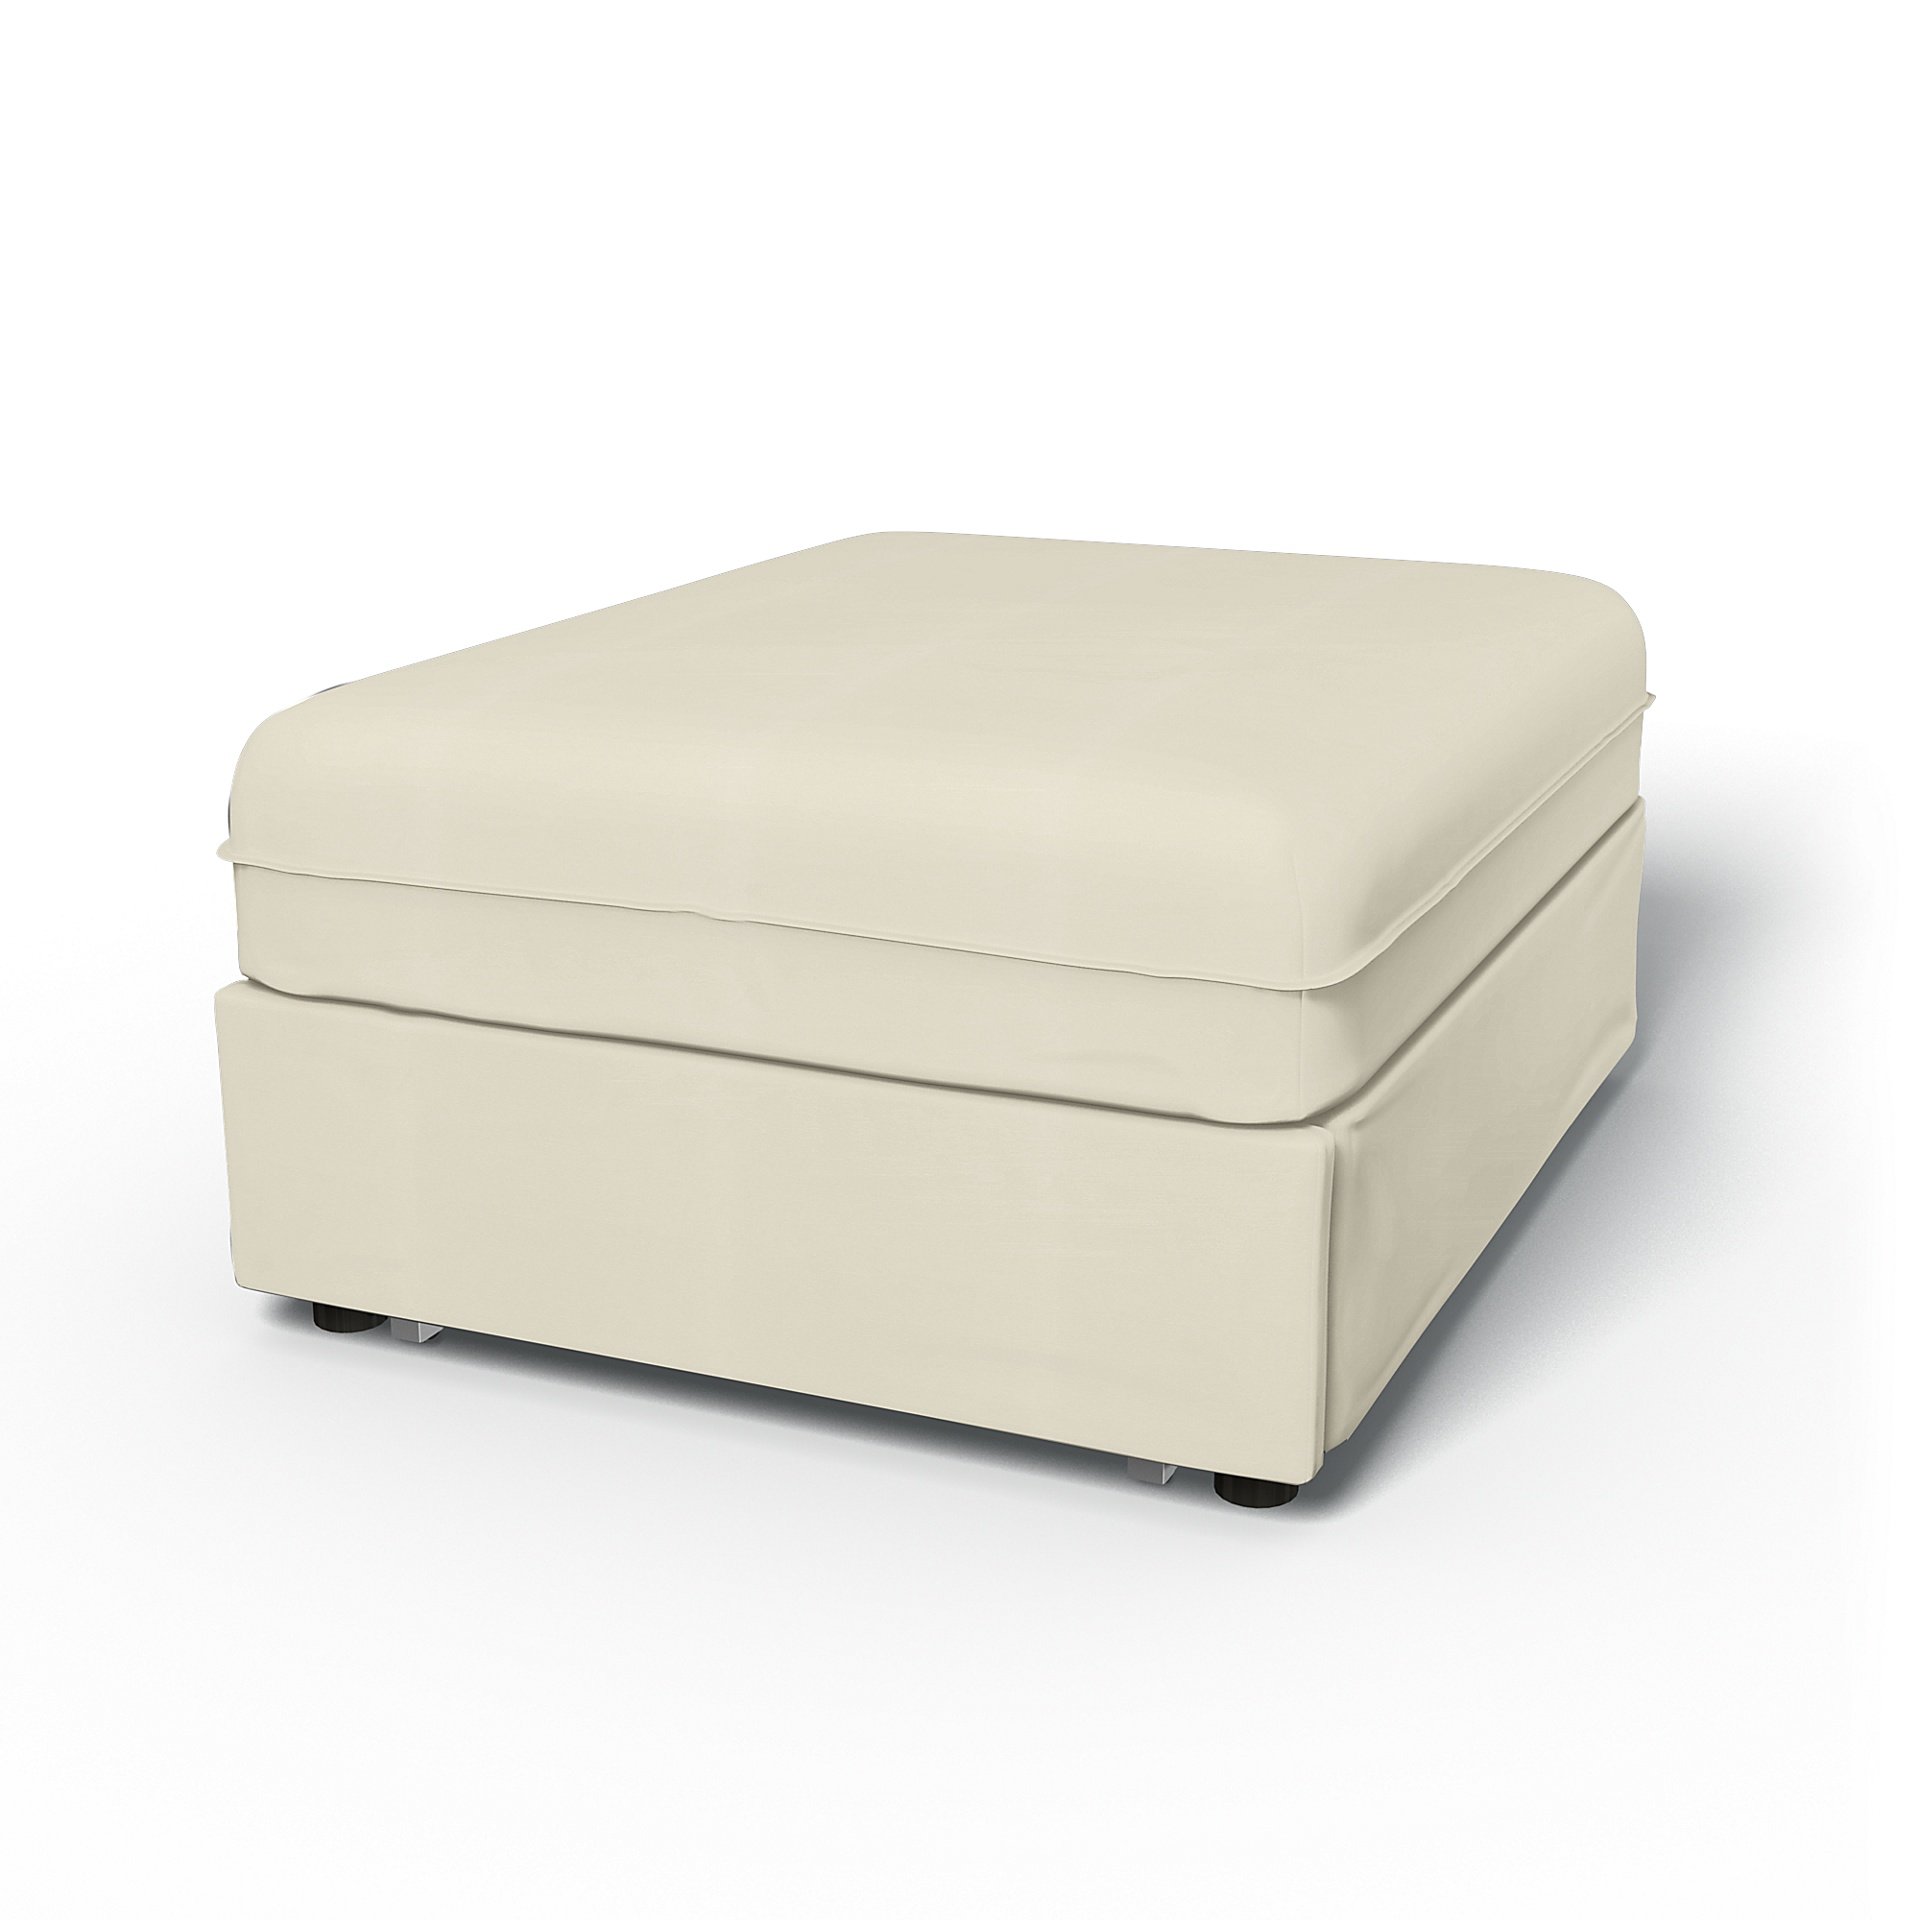 IKEA - Vallentuna Seat Module with Sofa Bed Cover 80x100cm 32x39in, Tofu, Cotton - Bemz